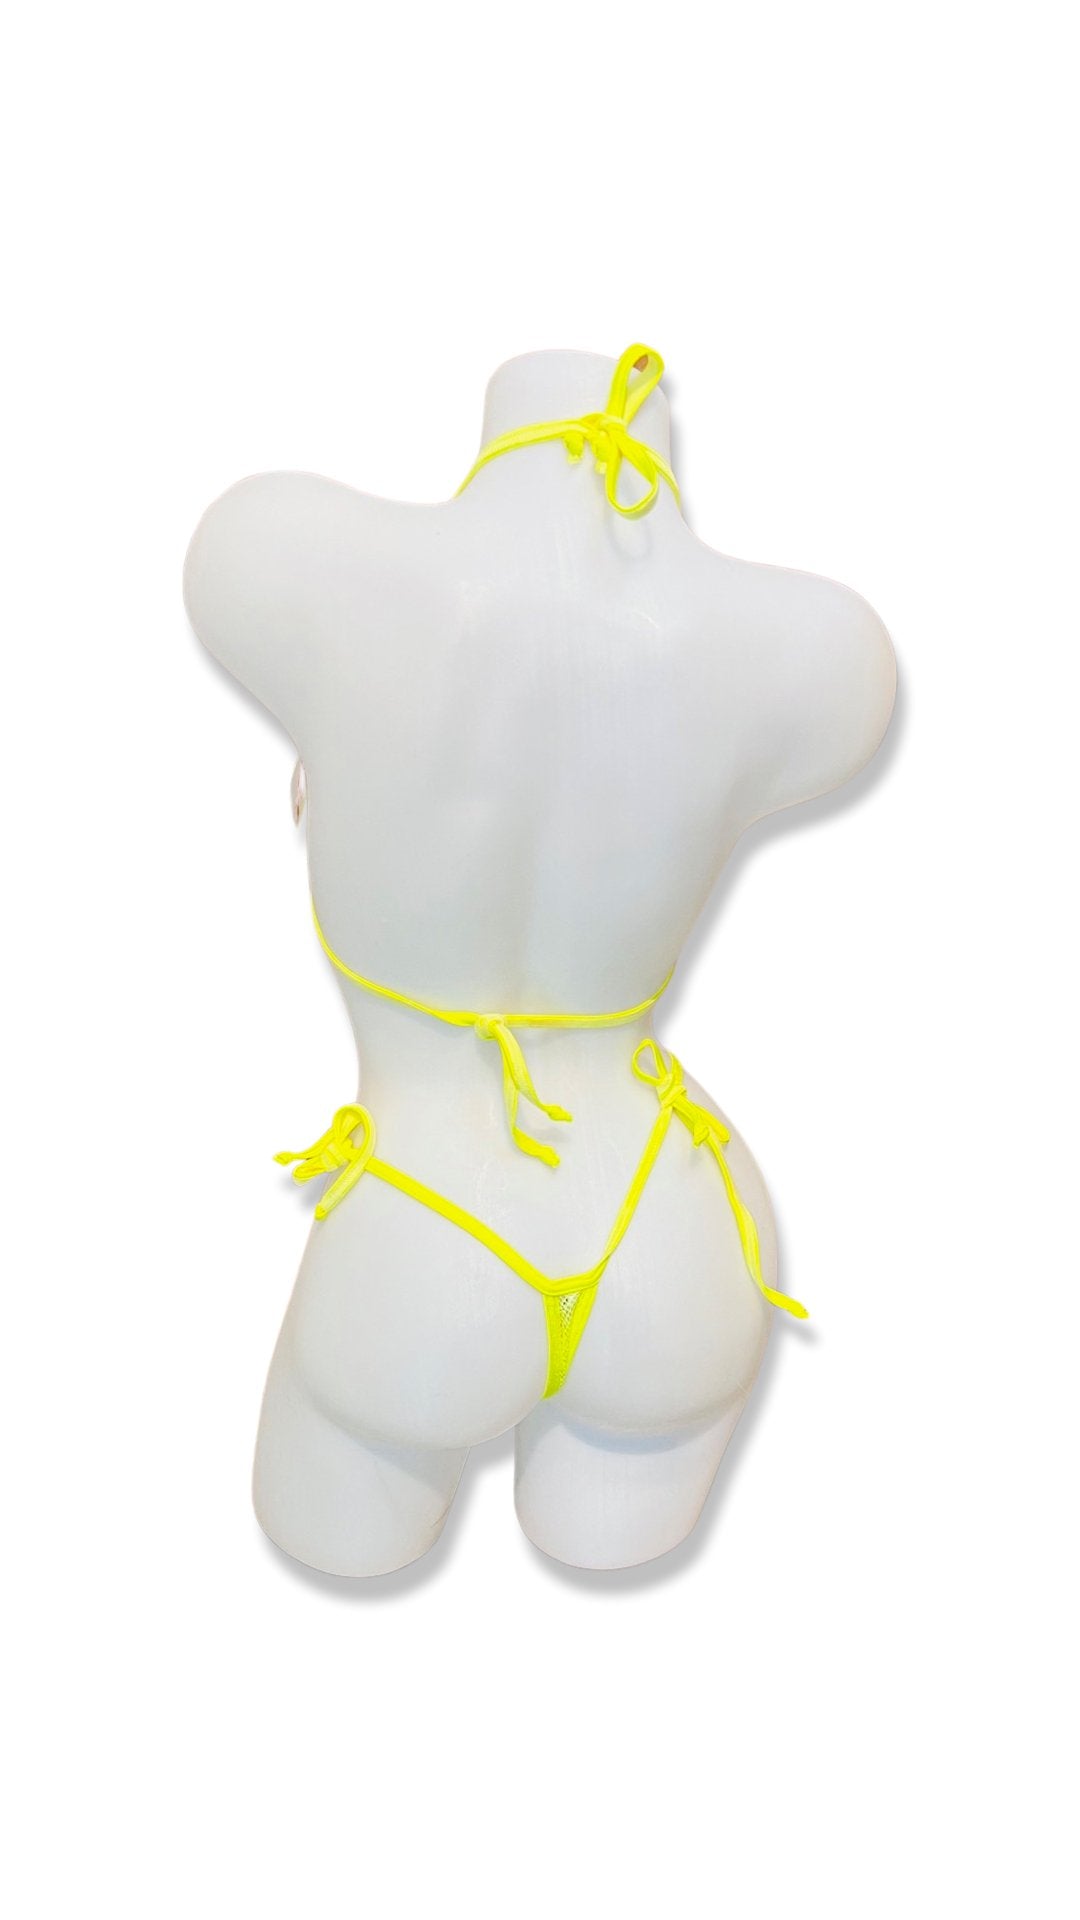 Fishnet Bikini Set - Neon Yellow - Model Express VancouverBikini